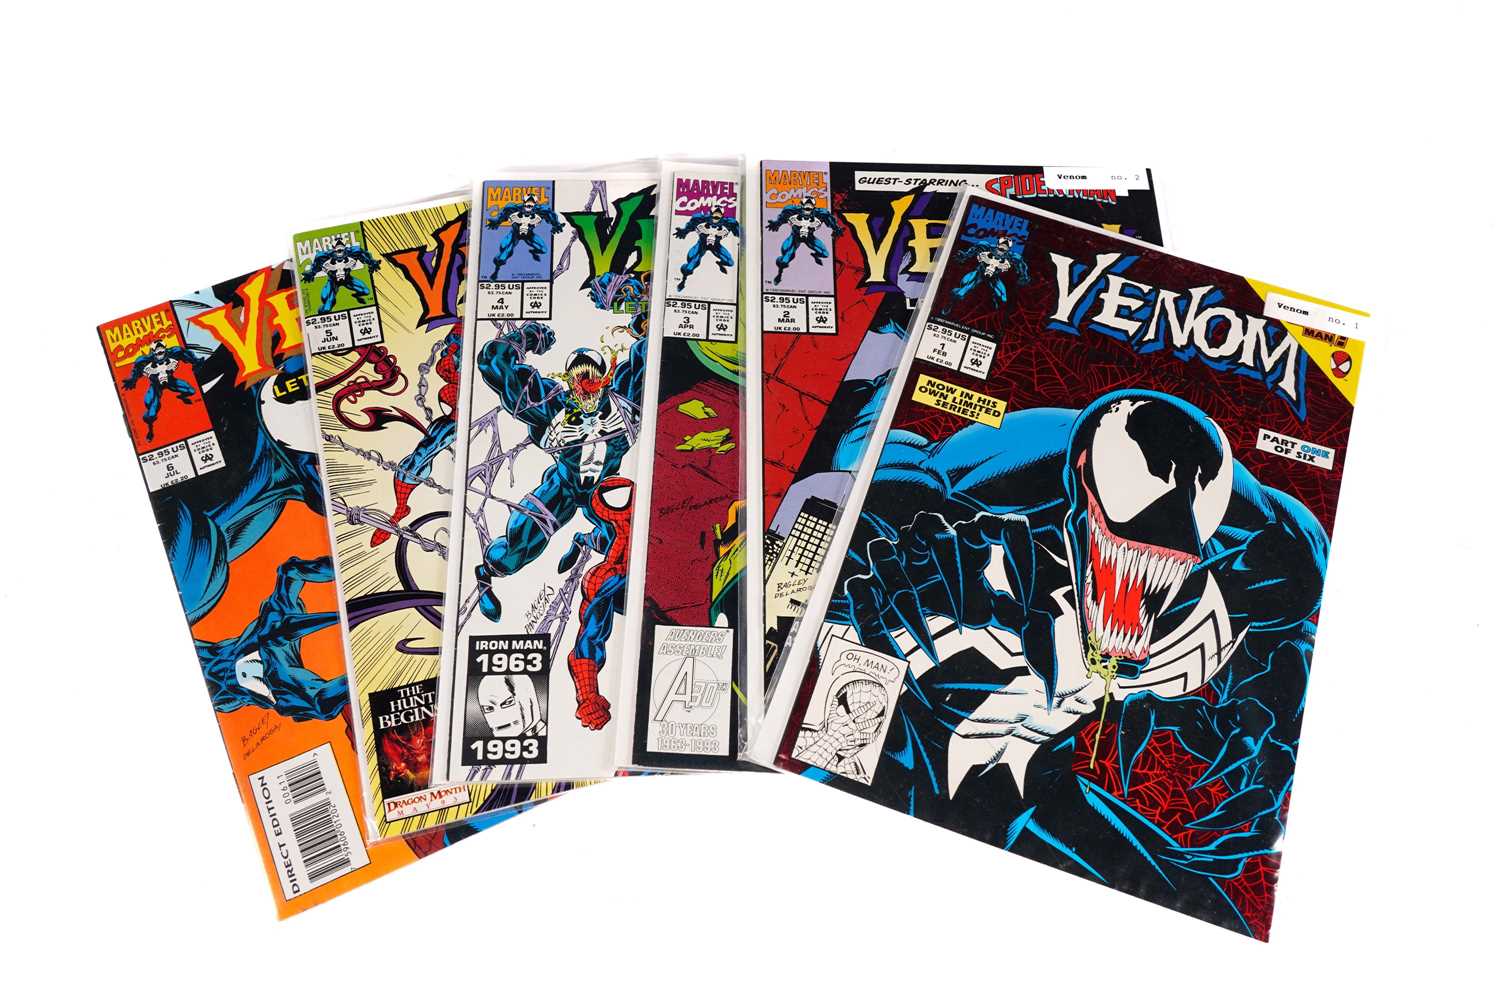 Venom No's. 1-6 by Marvel Comics